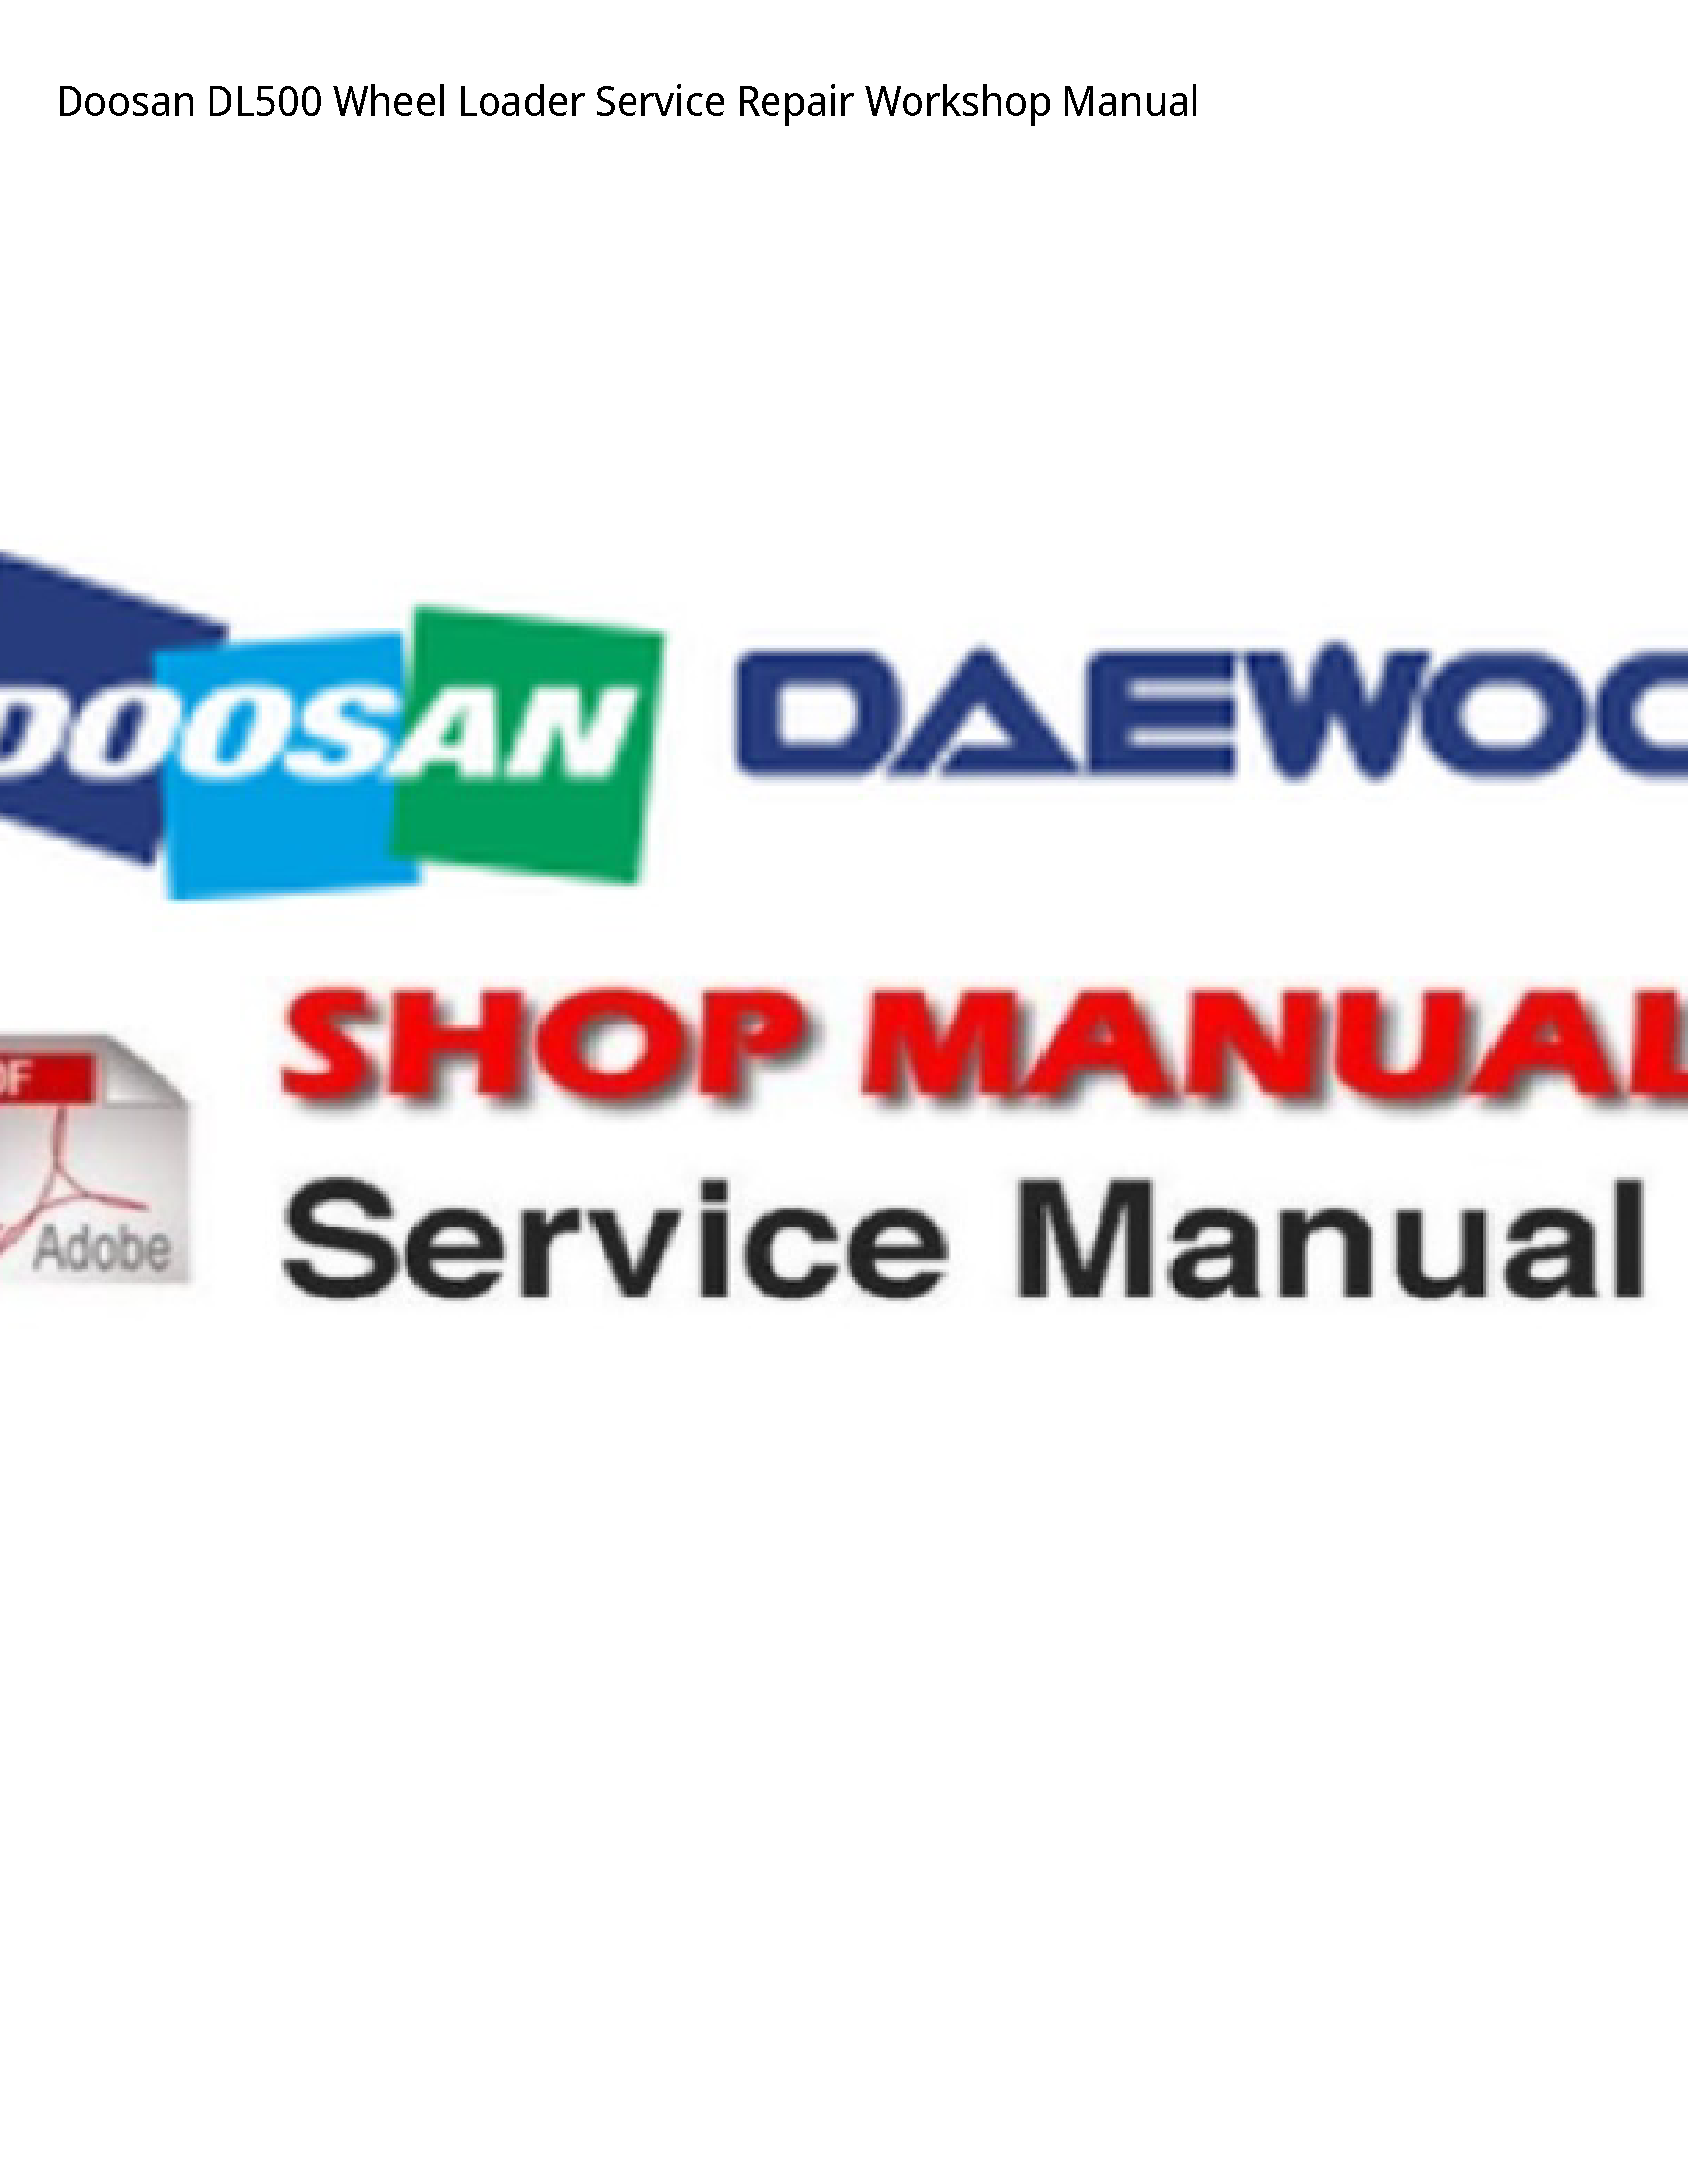 Doosan DL500 Wheel Loader manual